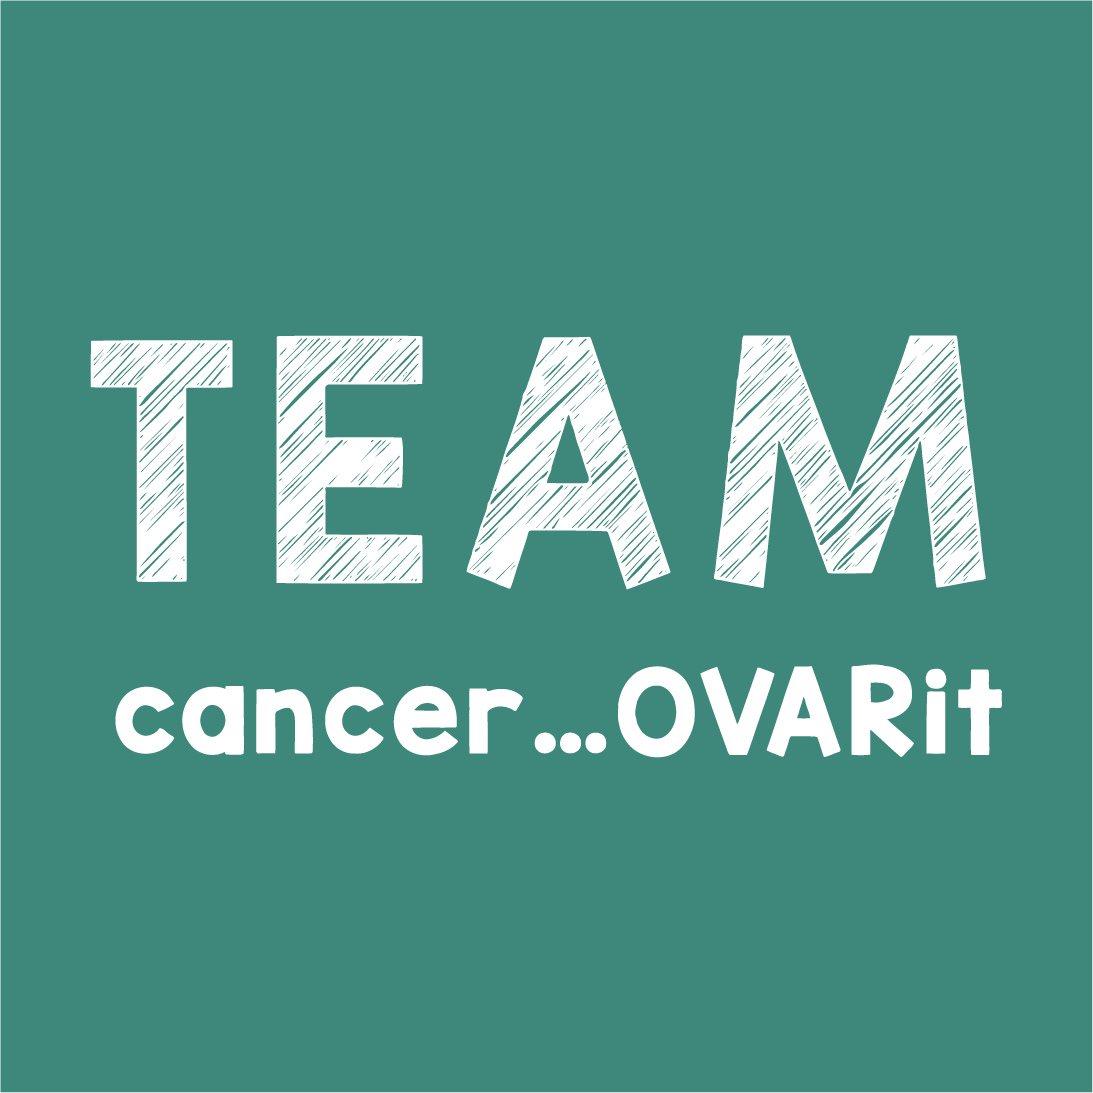 Join Team Cancer...OVAR it shirt design - zoomed